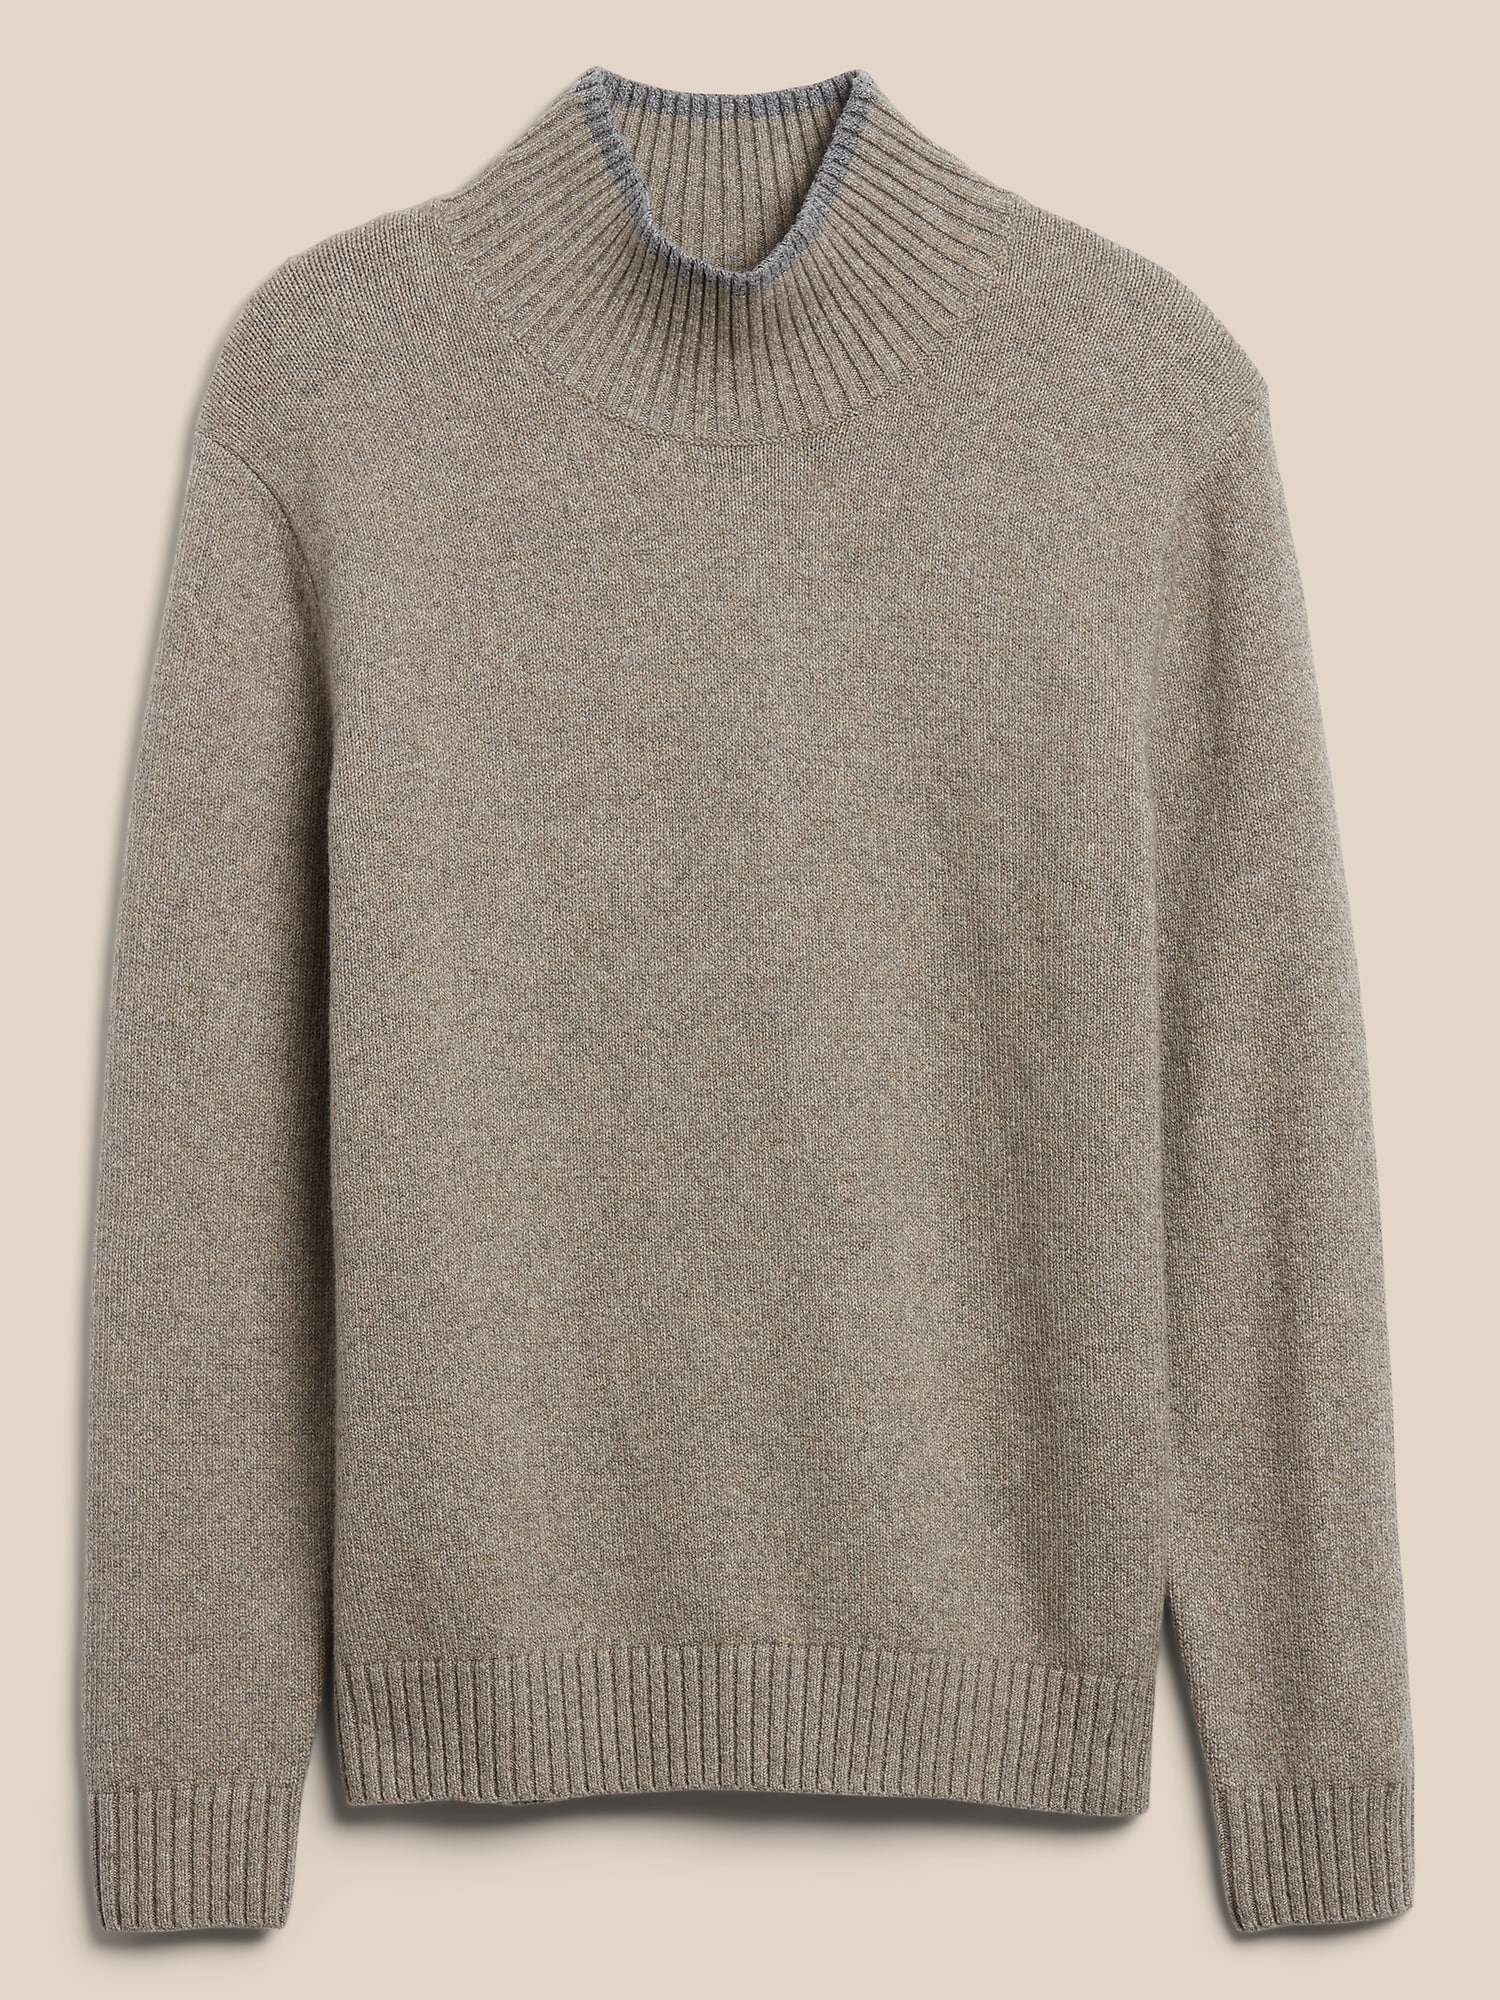 Cozy Turtleneck Pullover Sweater | Banana Republic Factory